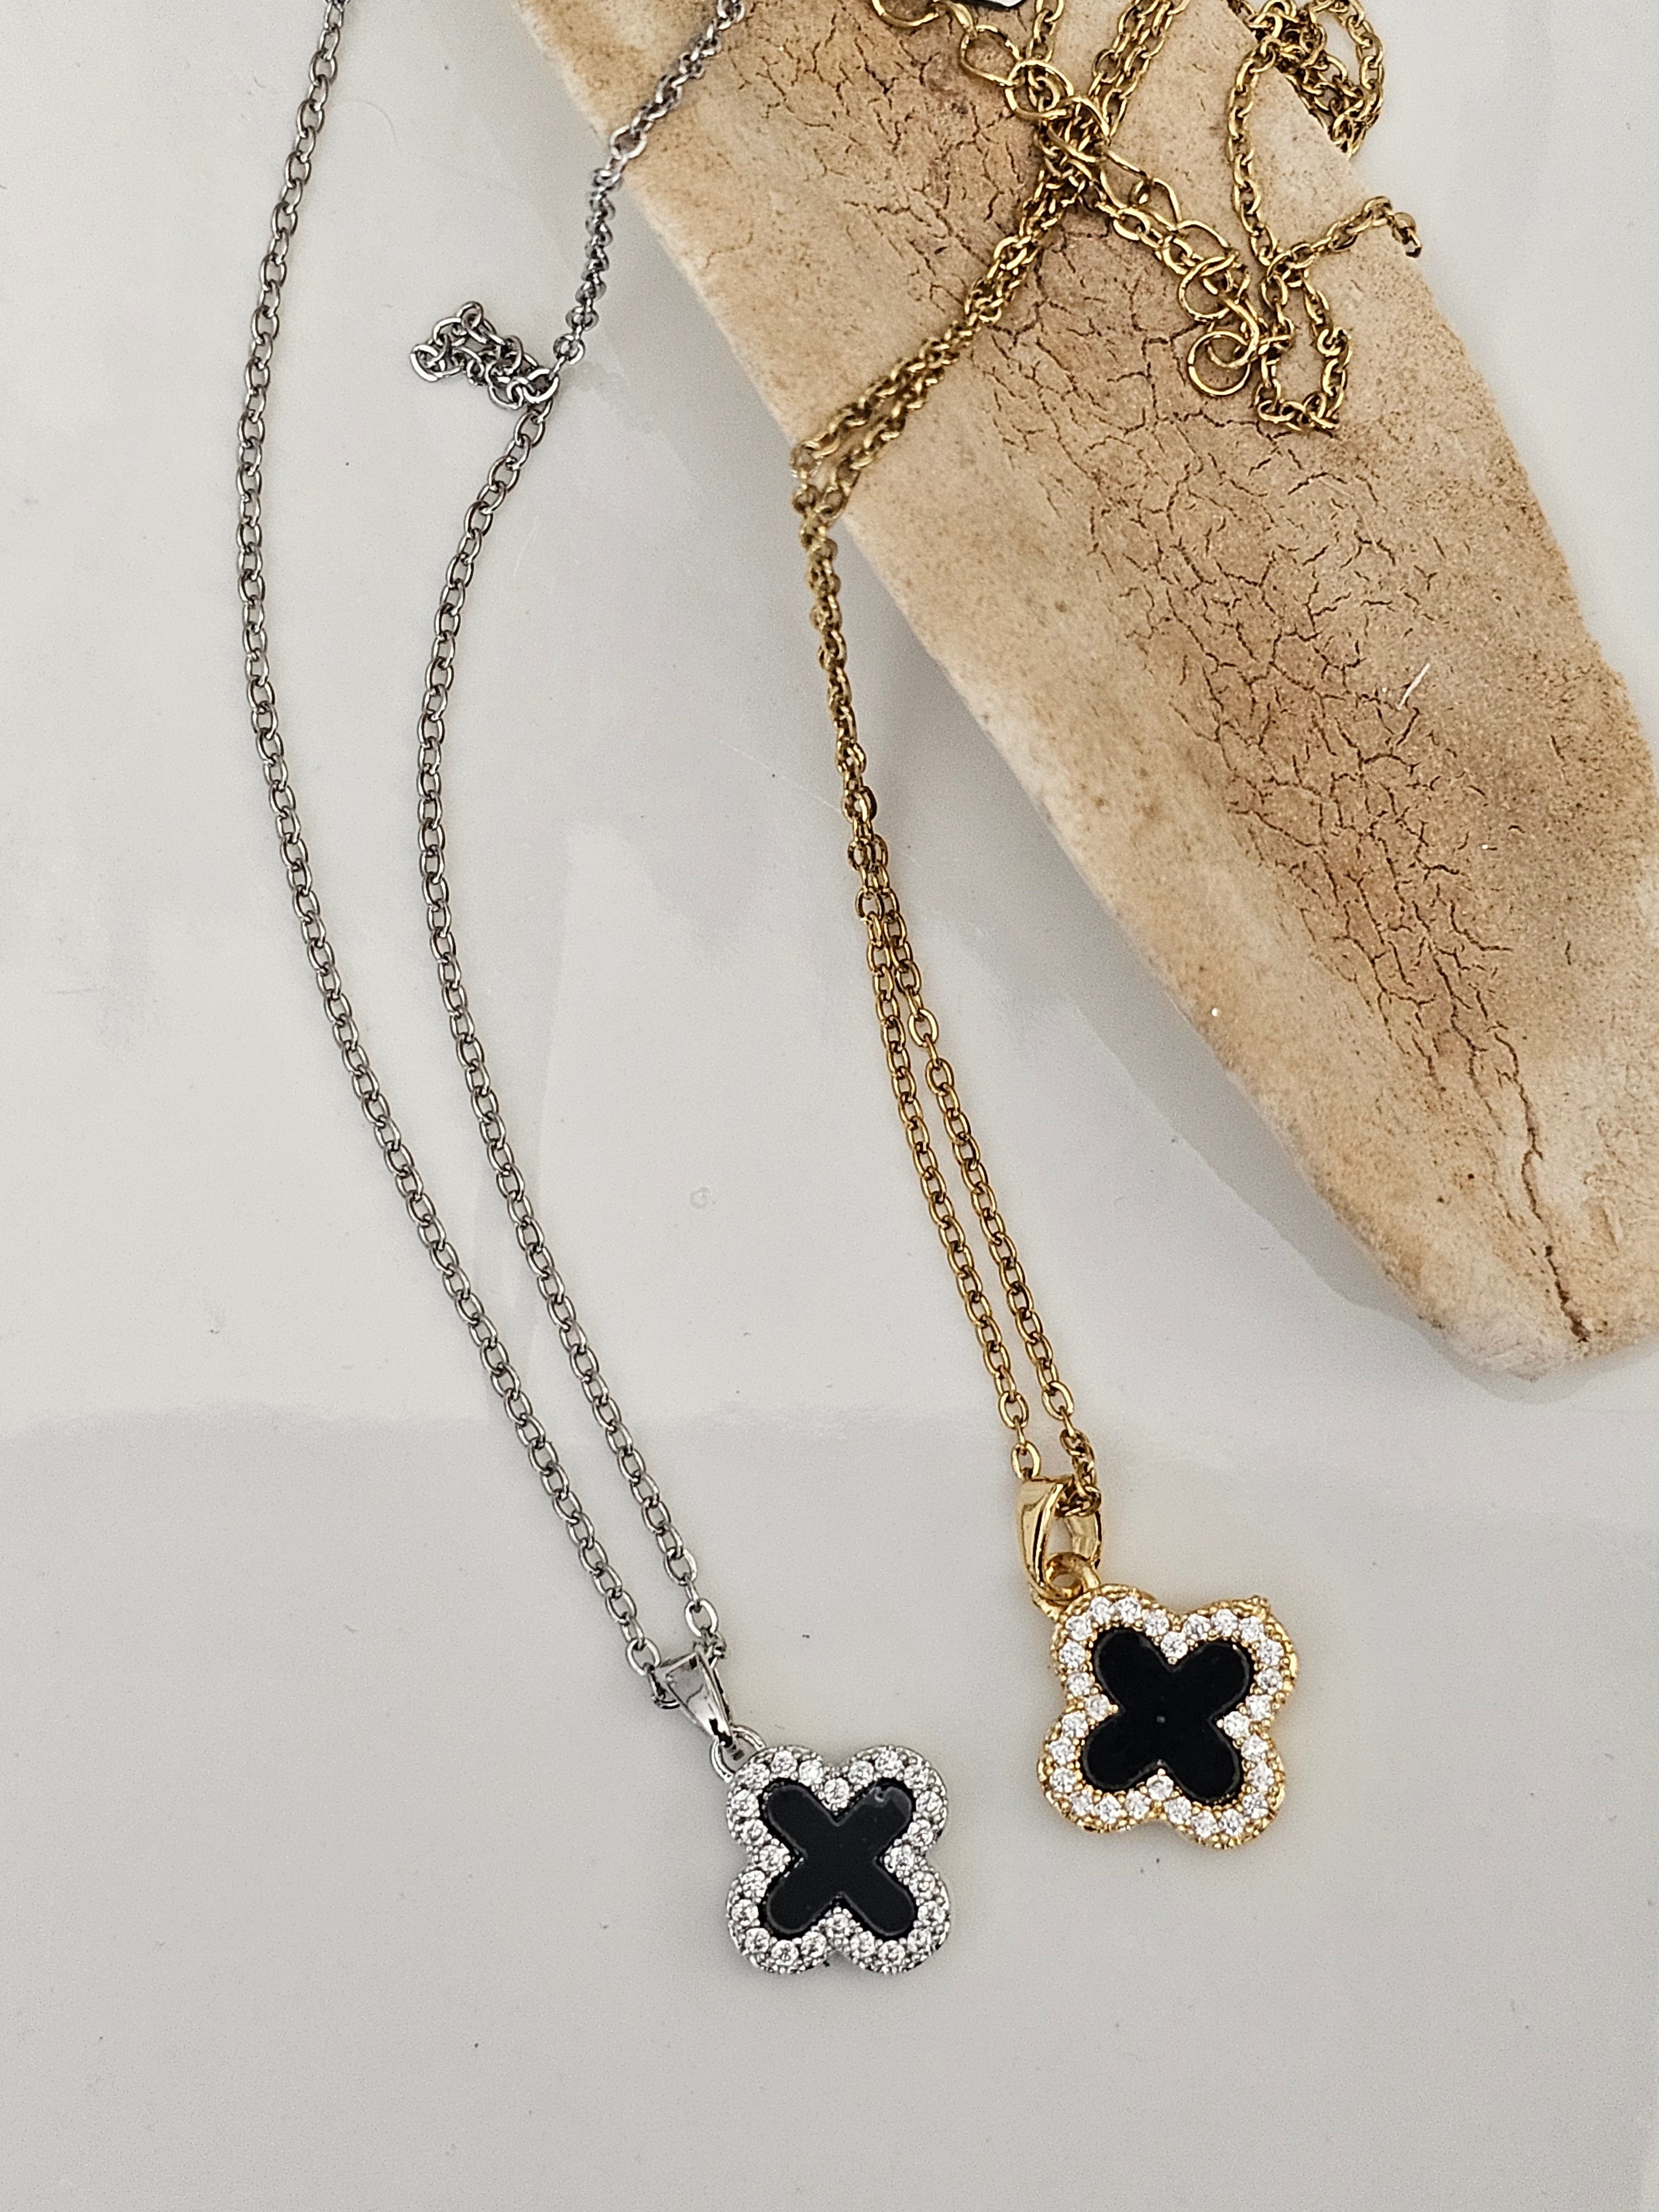 Clover pendant with stones